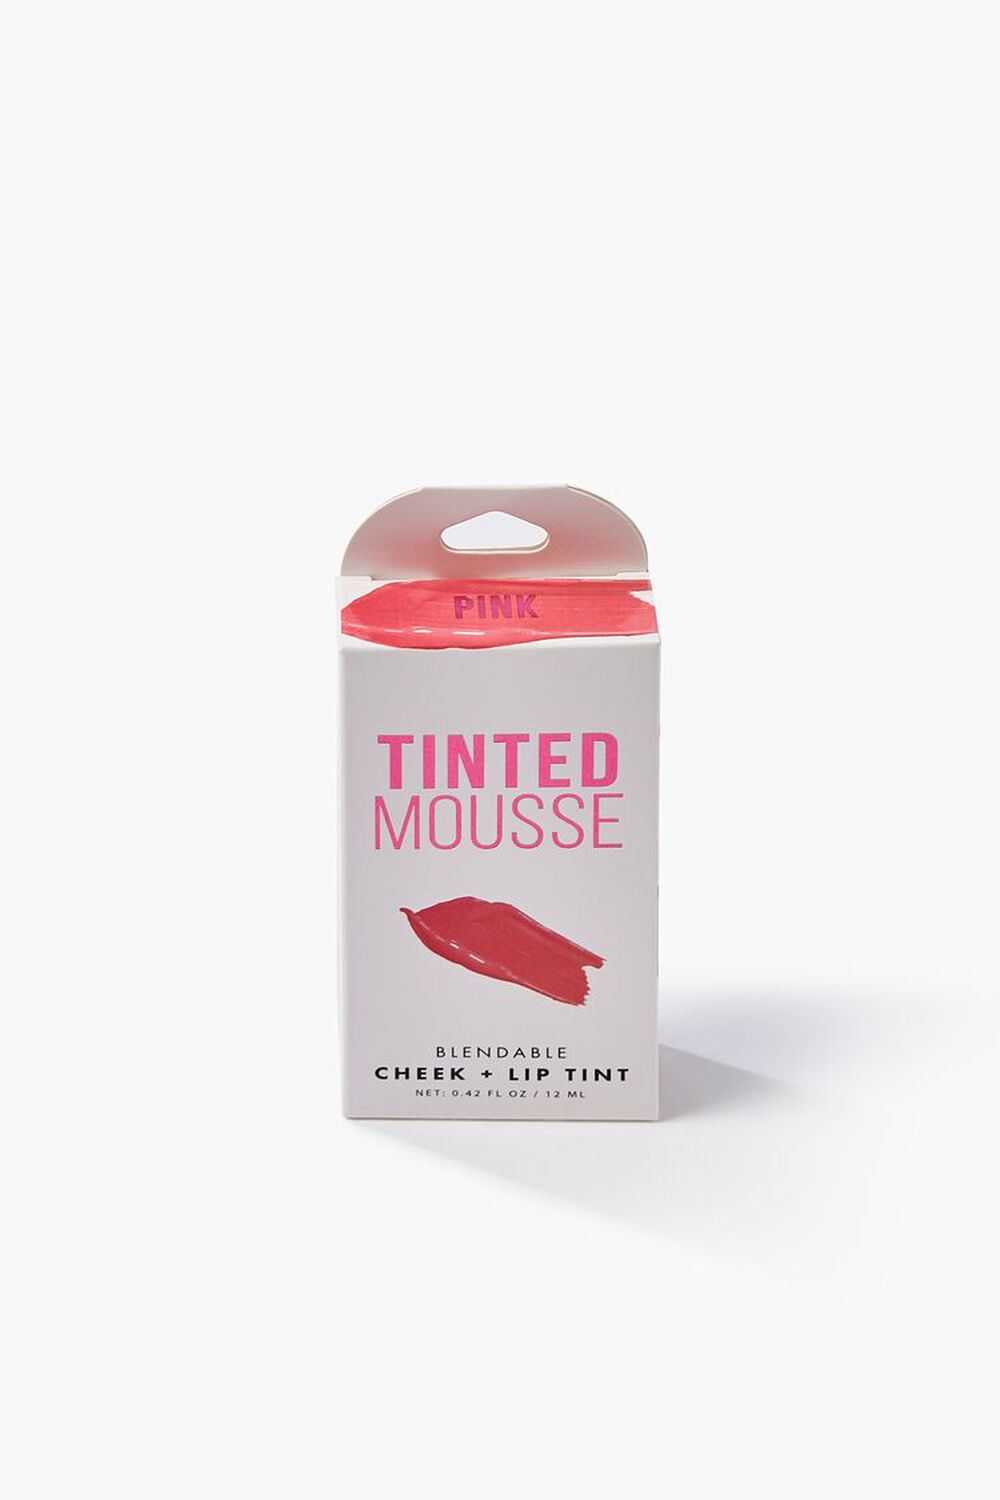 PINK Tinted Lip & Cheek Mousse, image 1